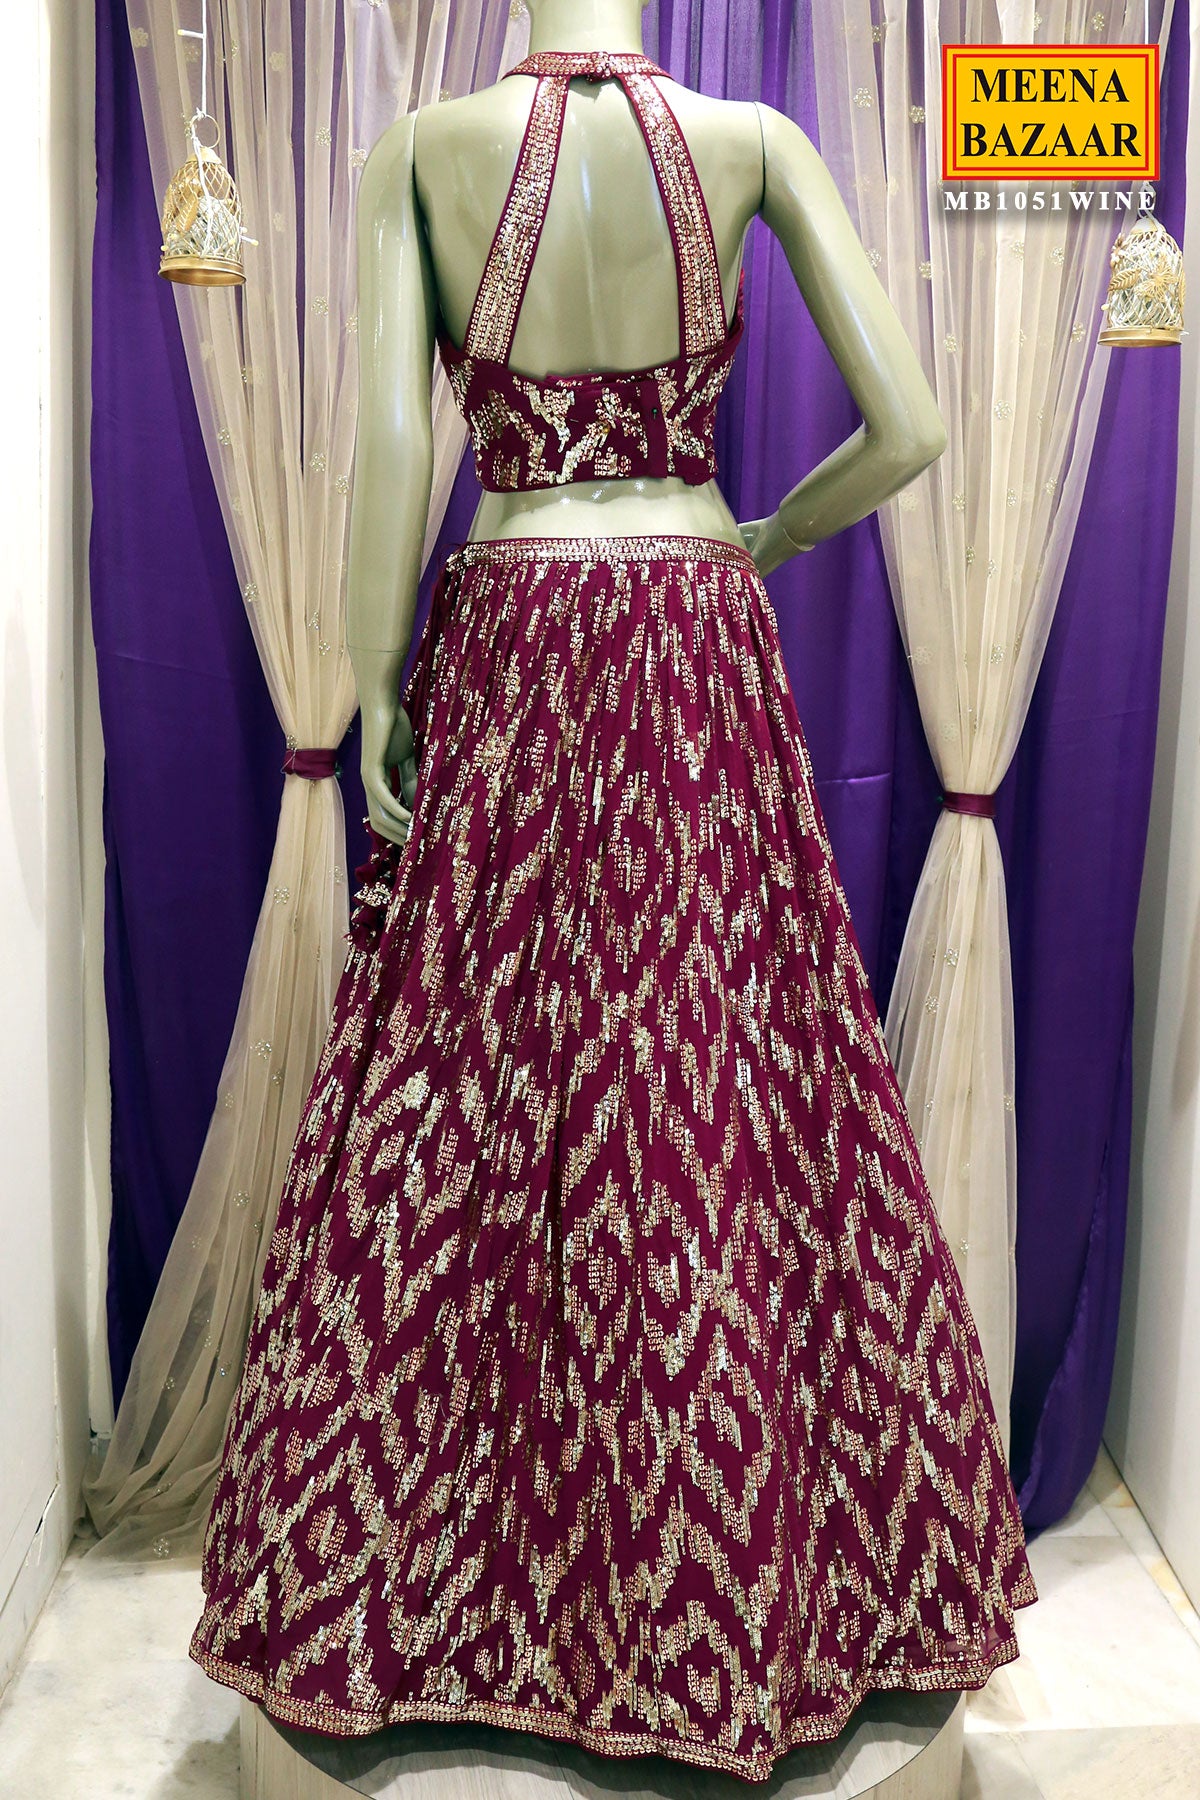 Meena Bazaar-the New Age Bride's 'Sari'torial Choice | Bridal Wear | Wedding  Blog